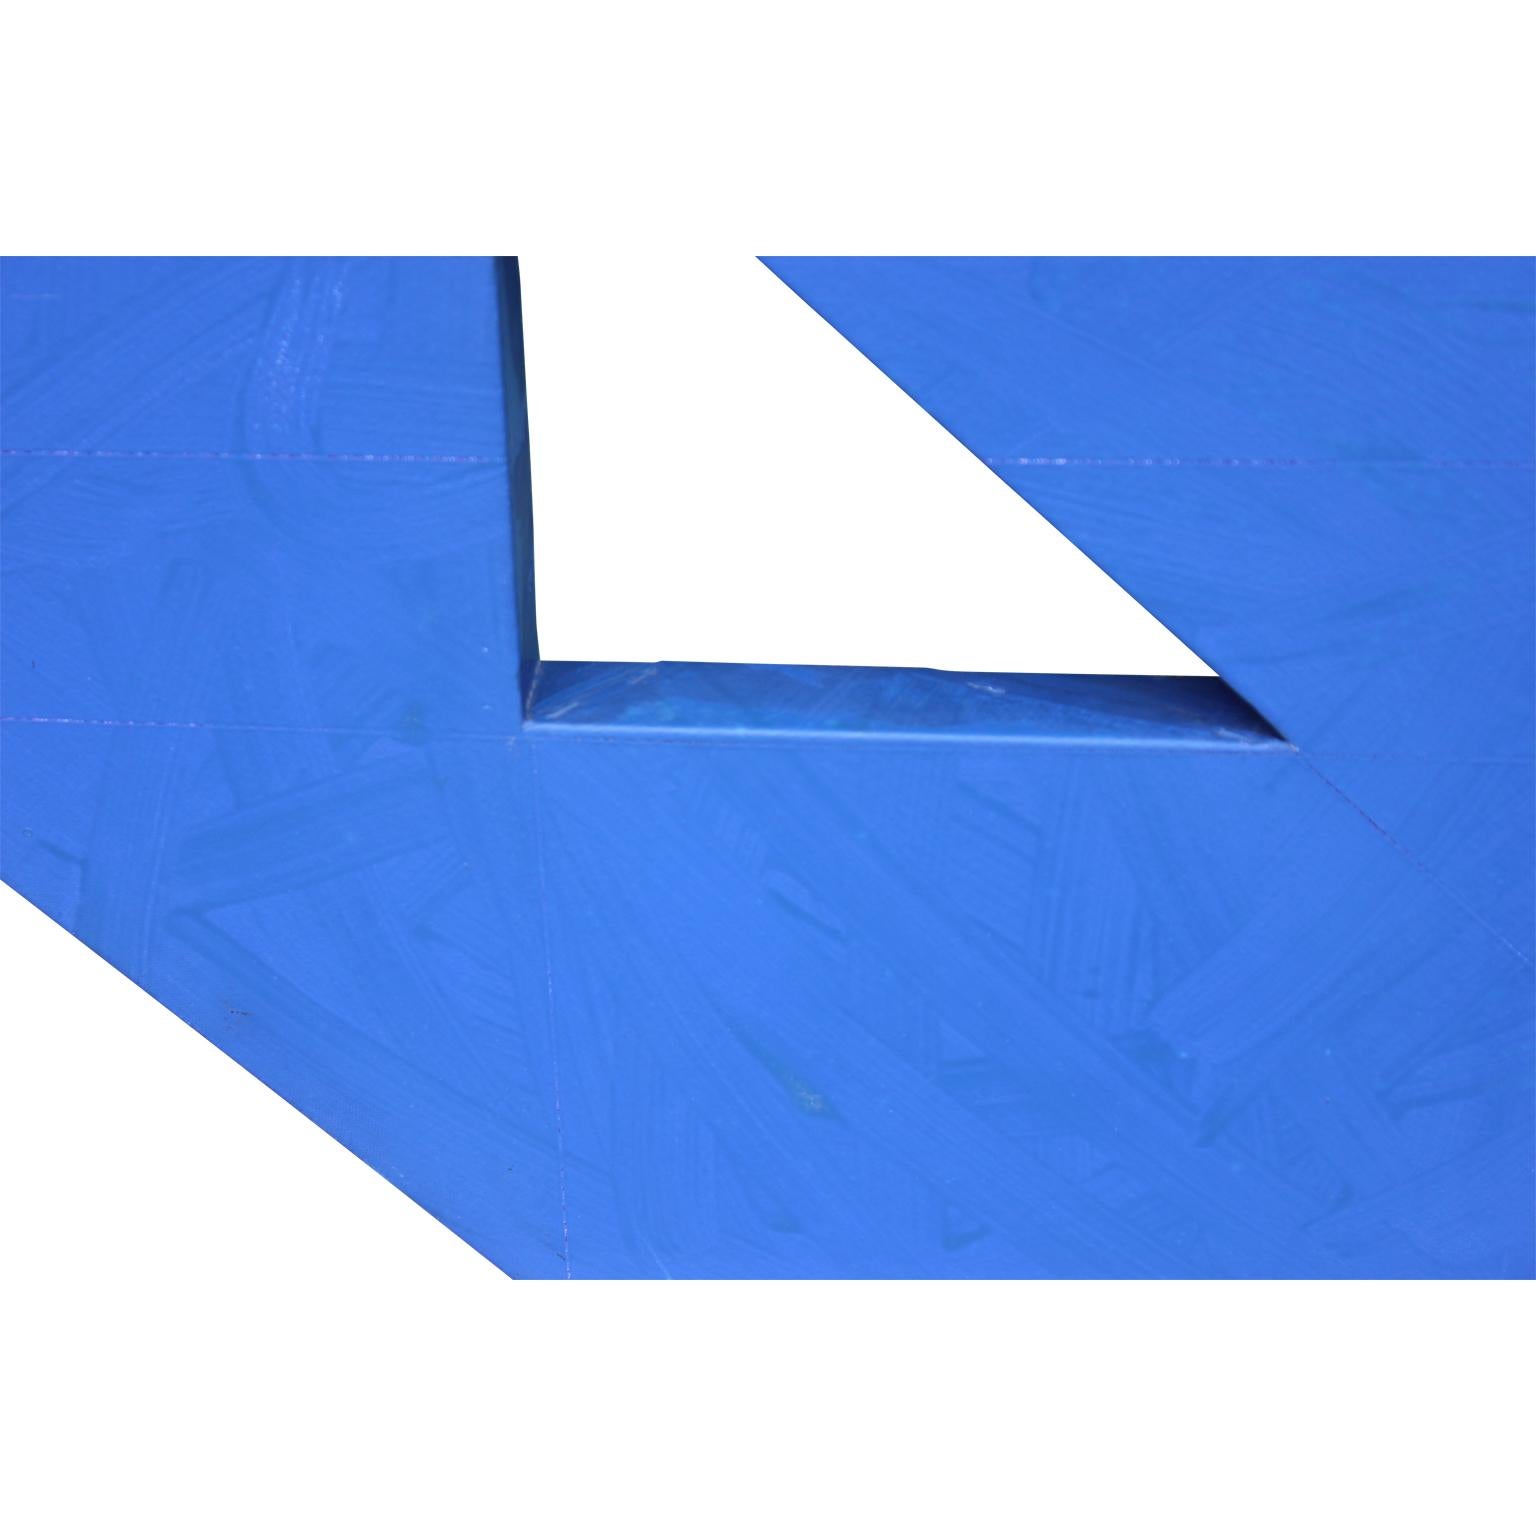 Atrium - Blue Geometric Abstract - Abstract Geometric Mixed Media Art by Gary Jurysta